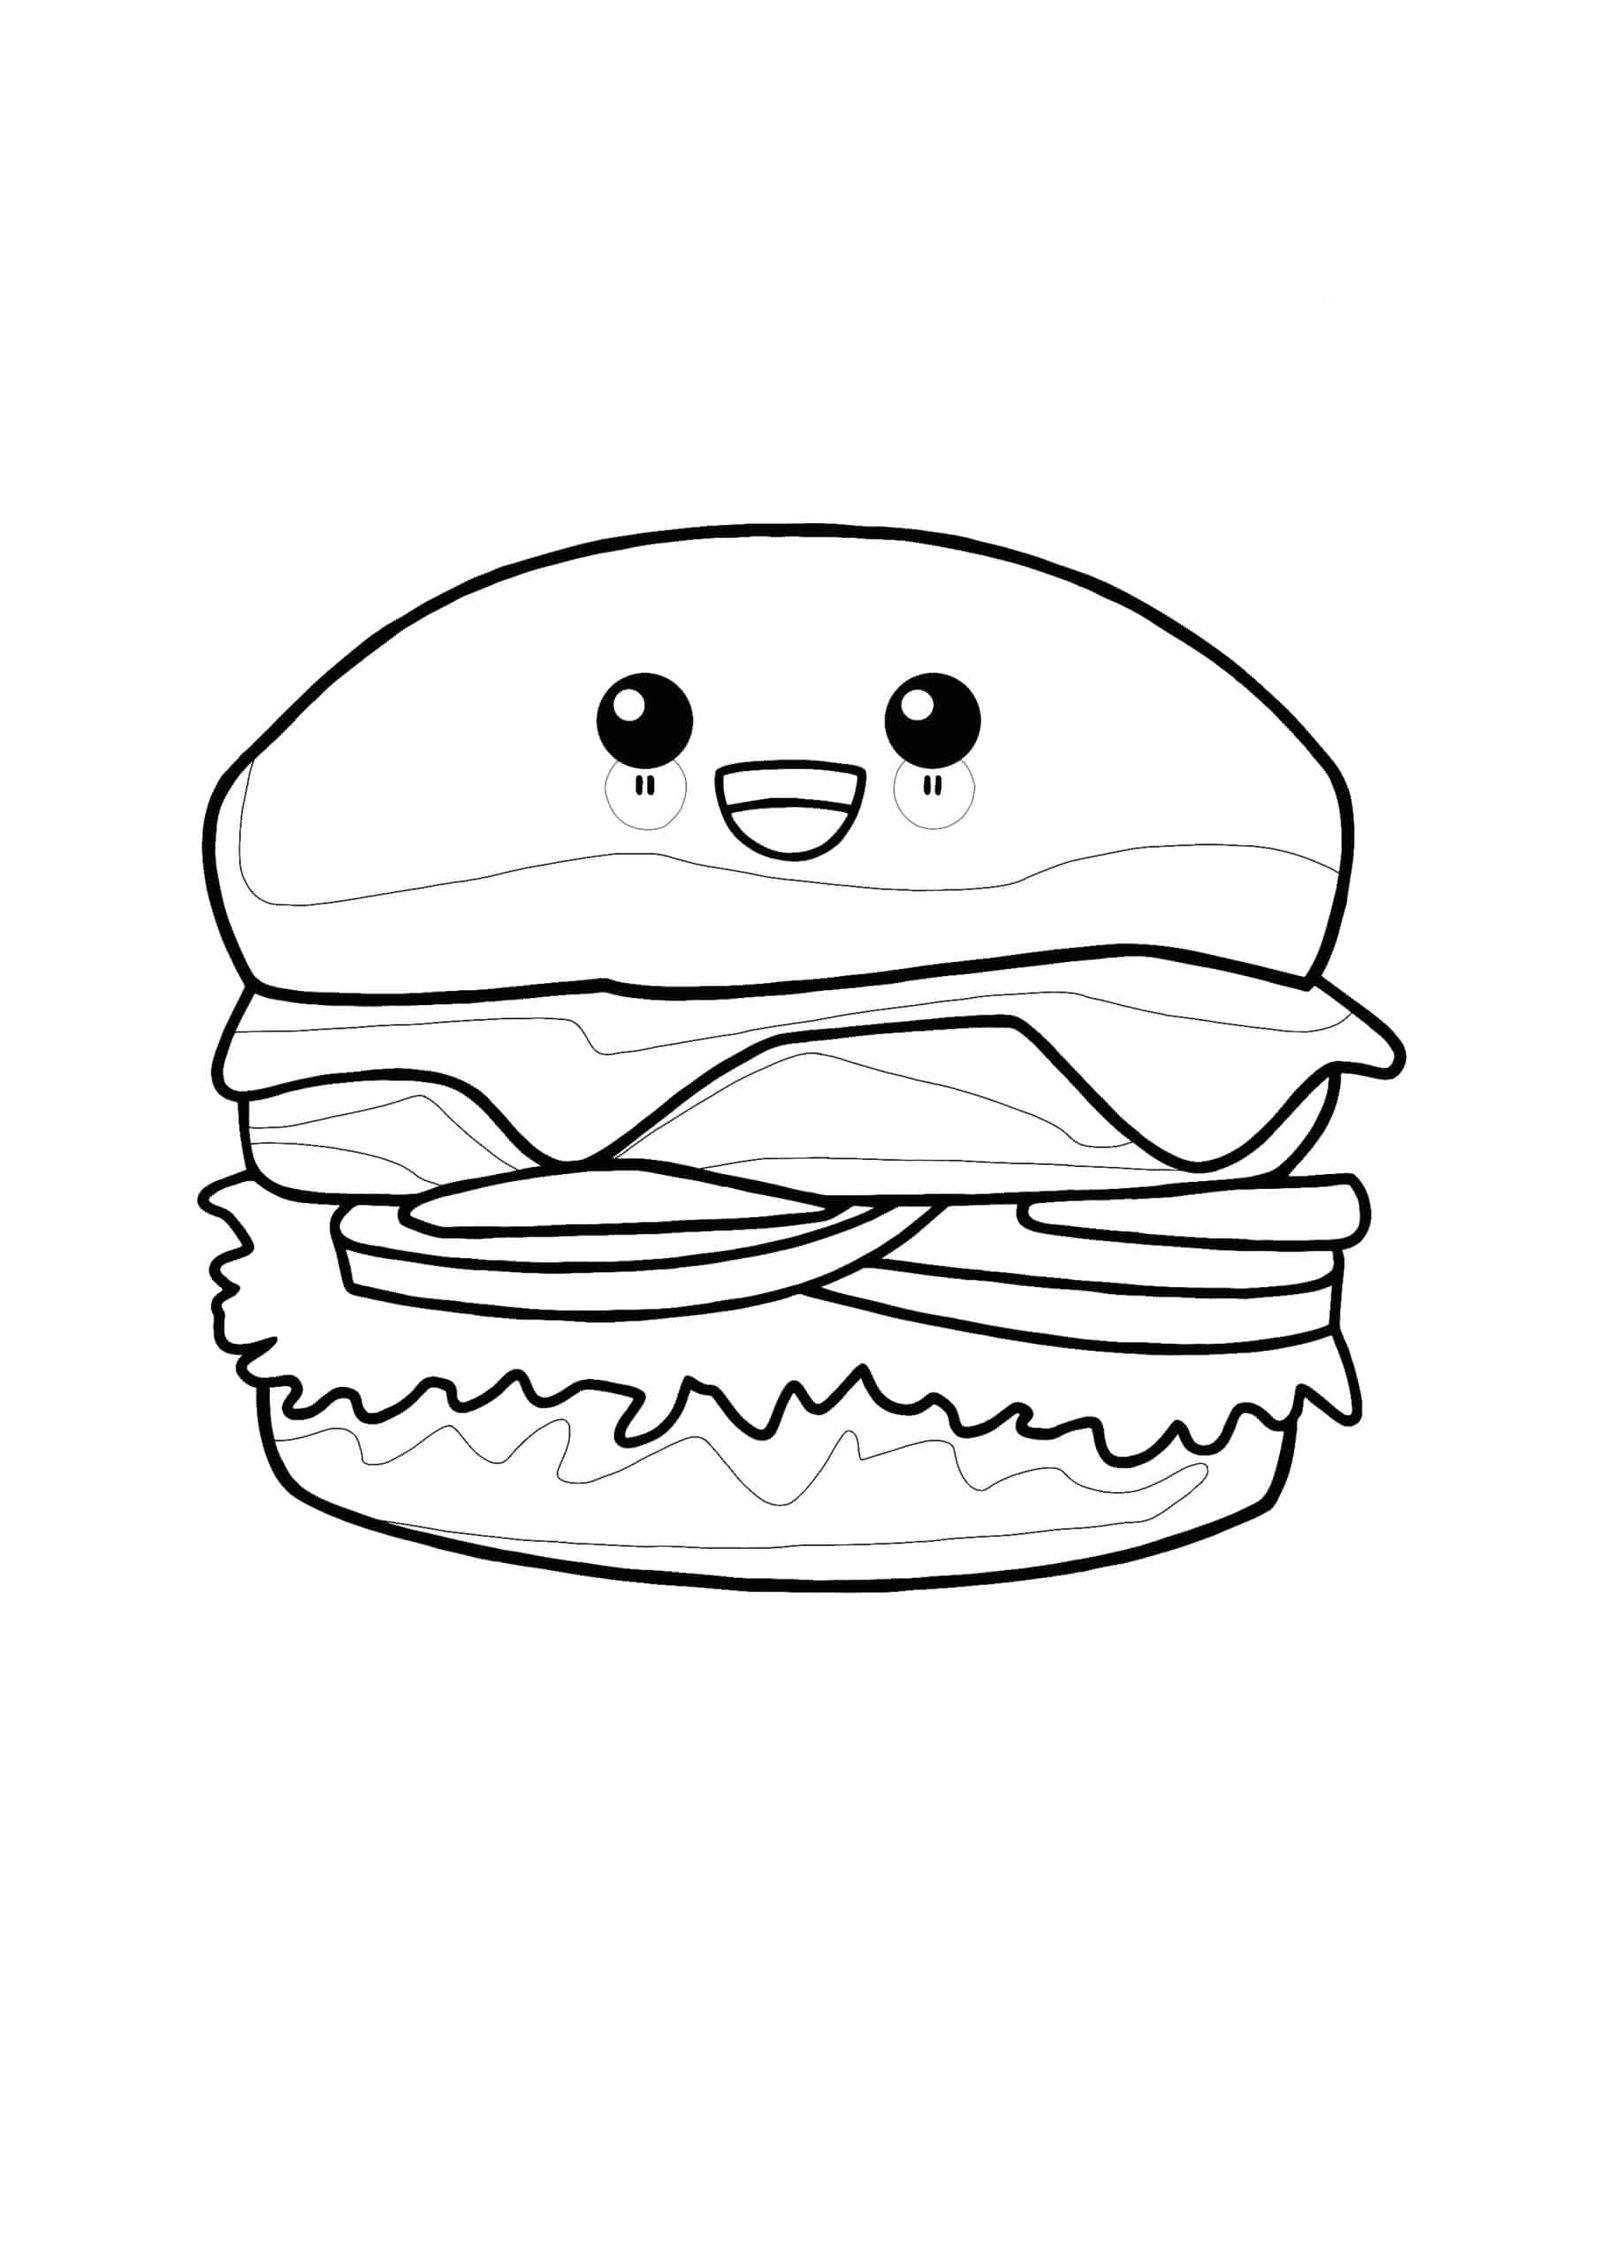 Kawaii Hamburger kleurplaat